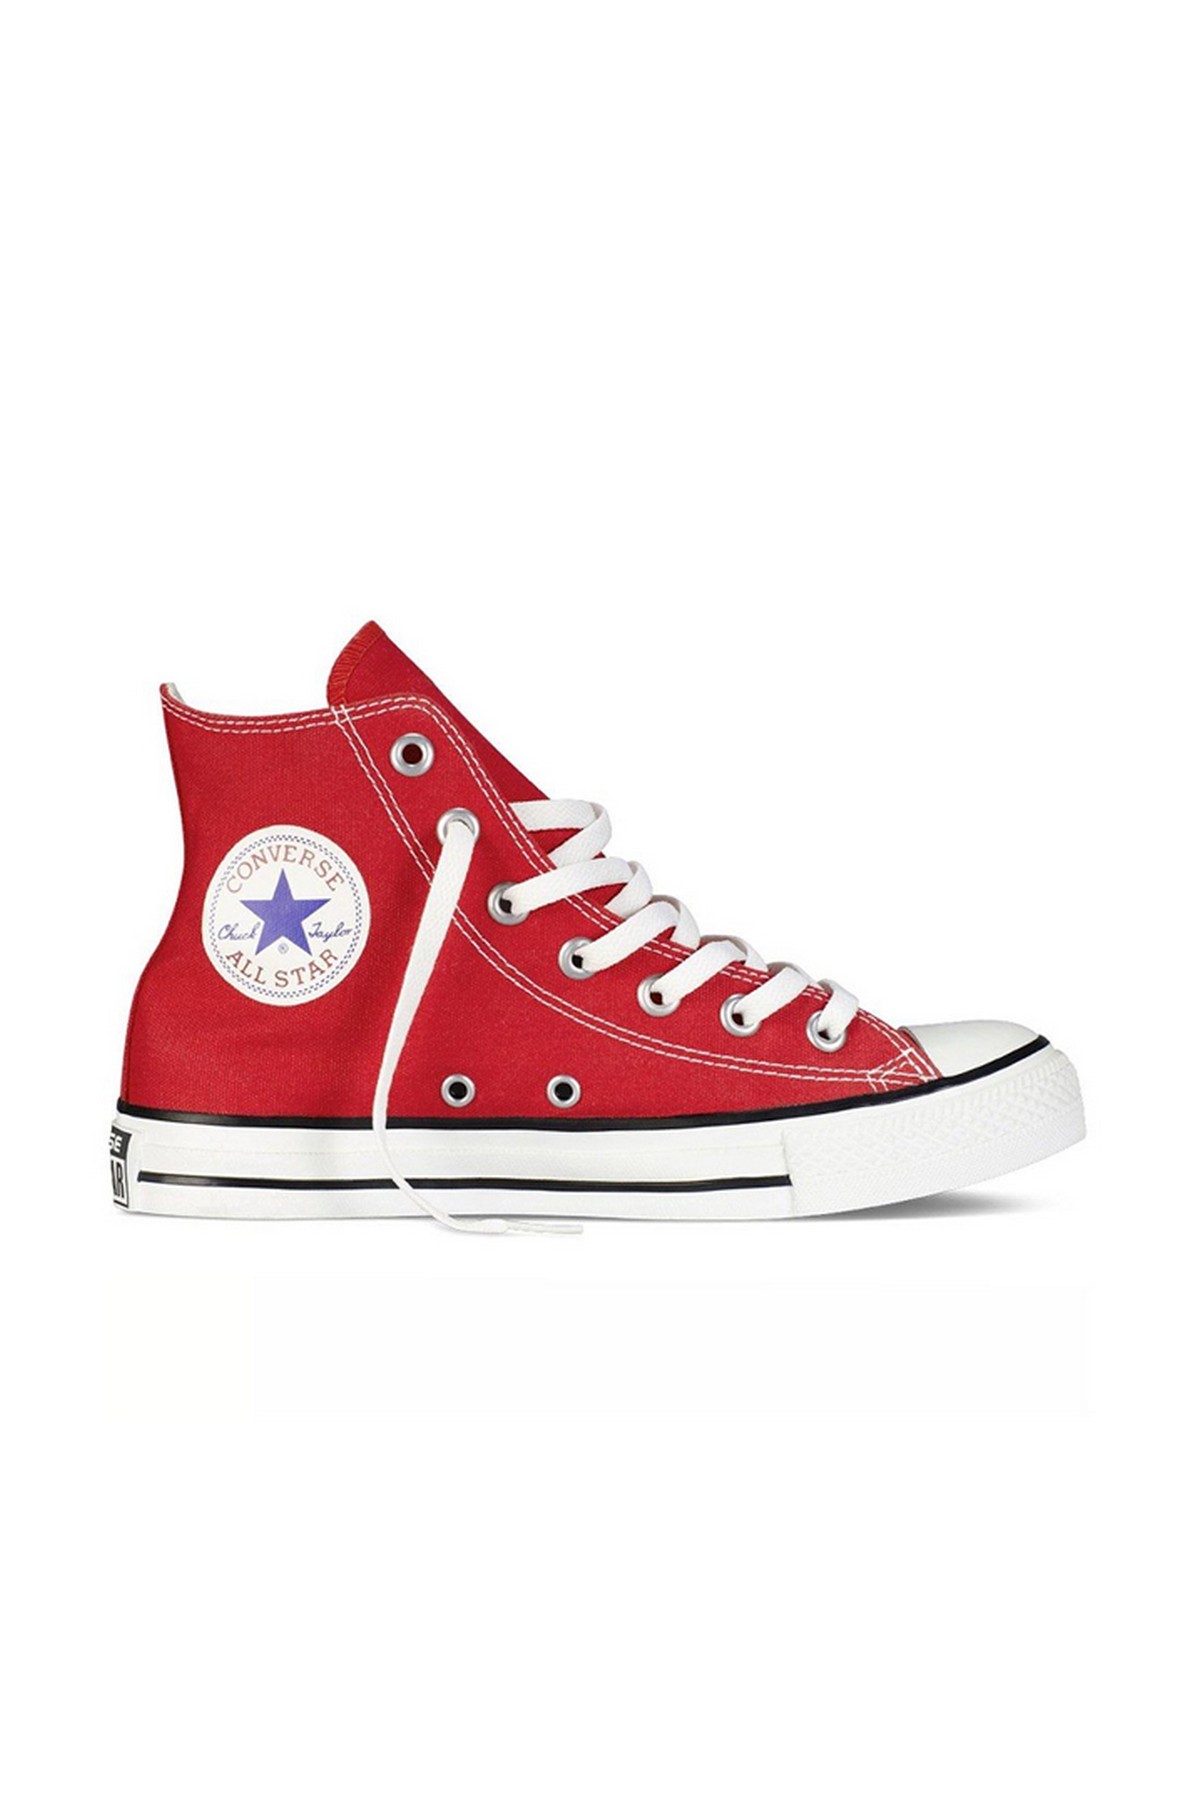 Converse M9621C - Chuck Taylor All Star Unisex Kırmızı Sneaker Ayakkabı